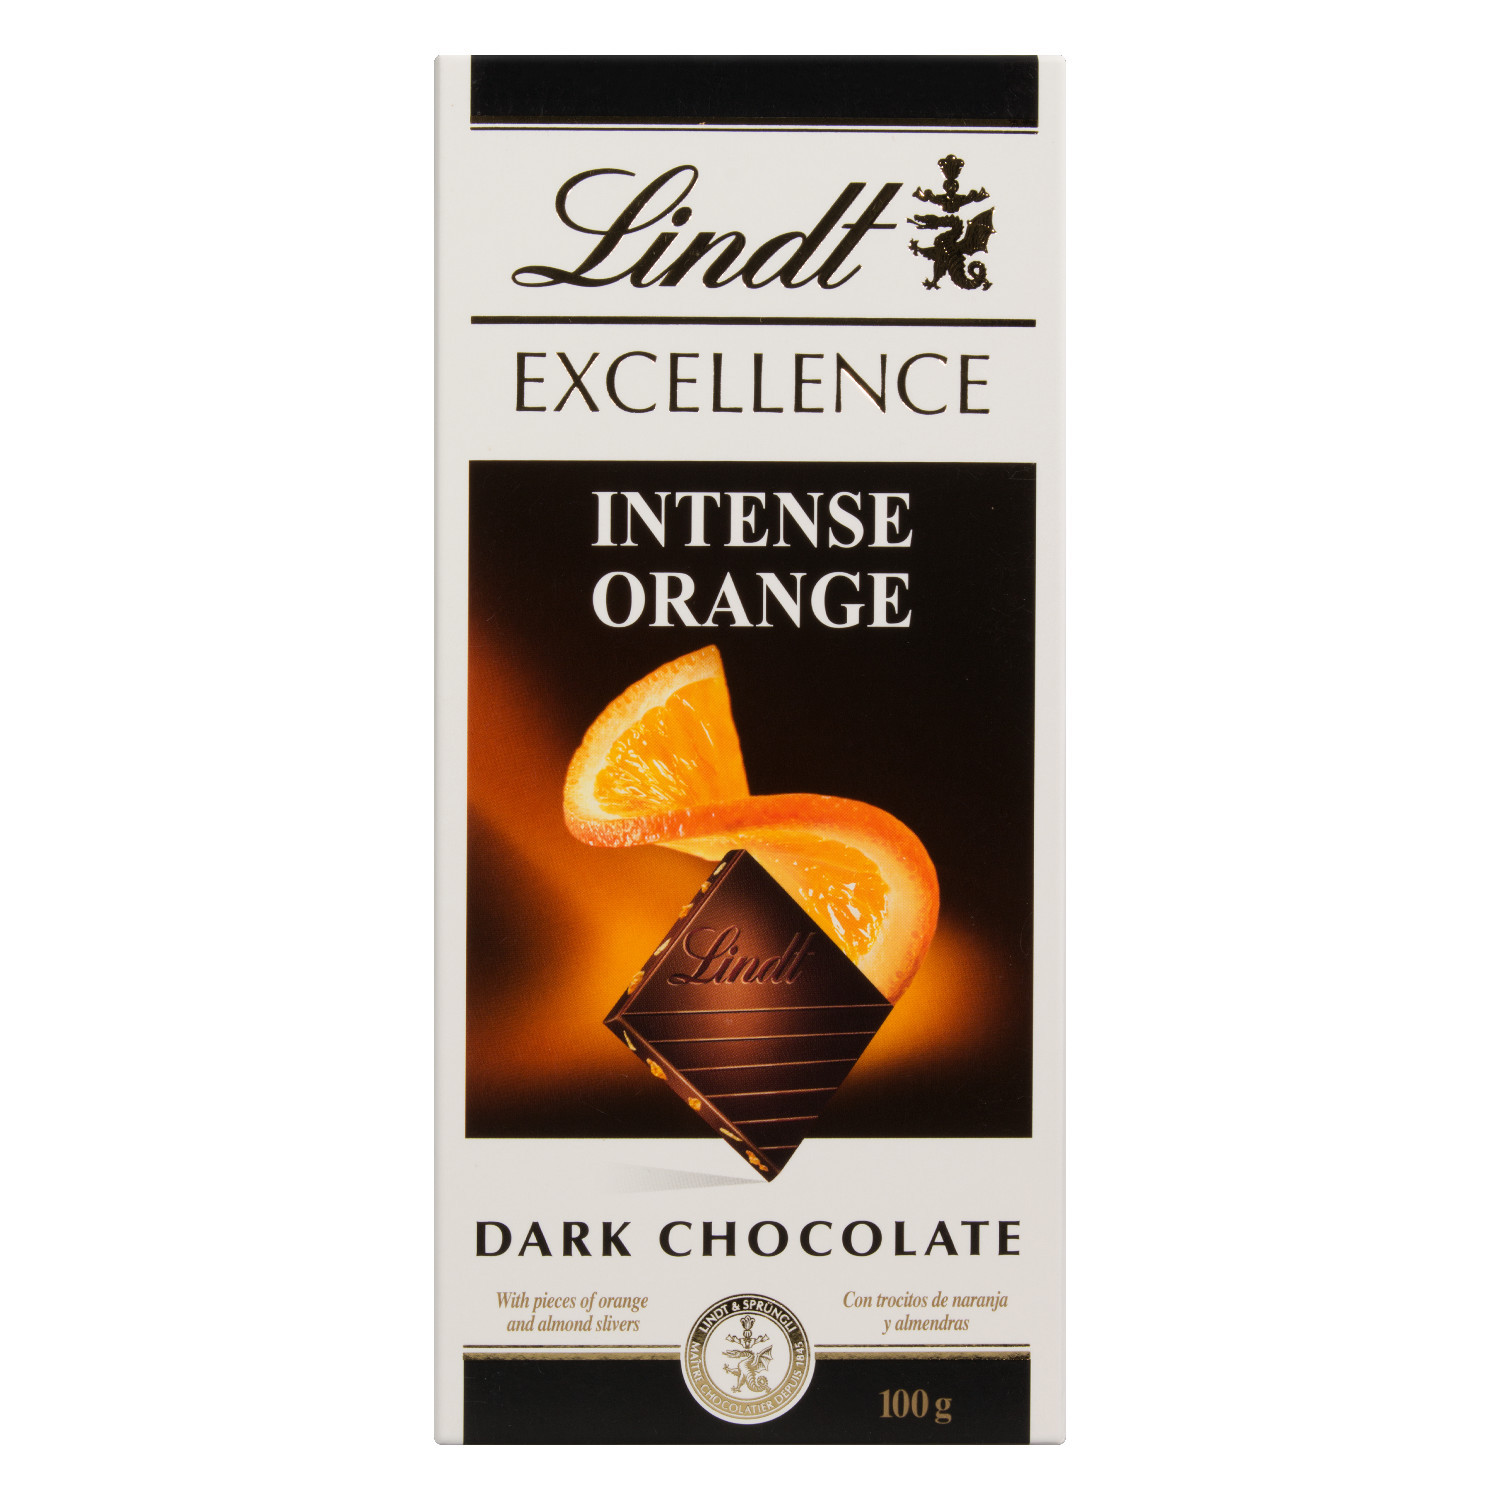 Barra de Chocolate Lindt Excellence Intense Orange 100g Dark